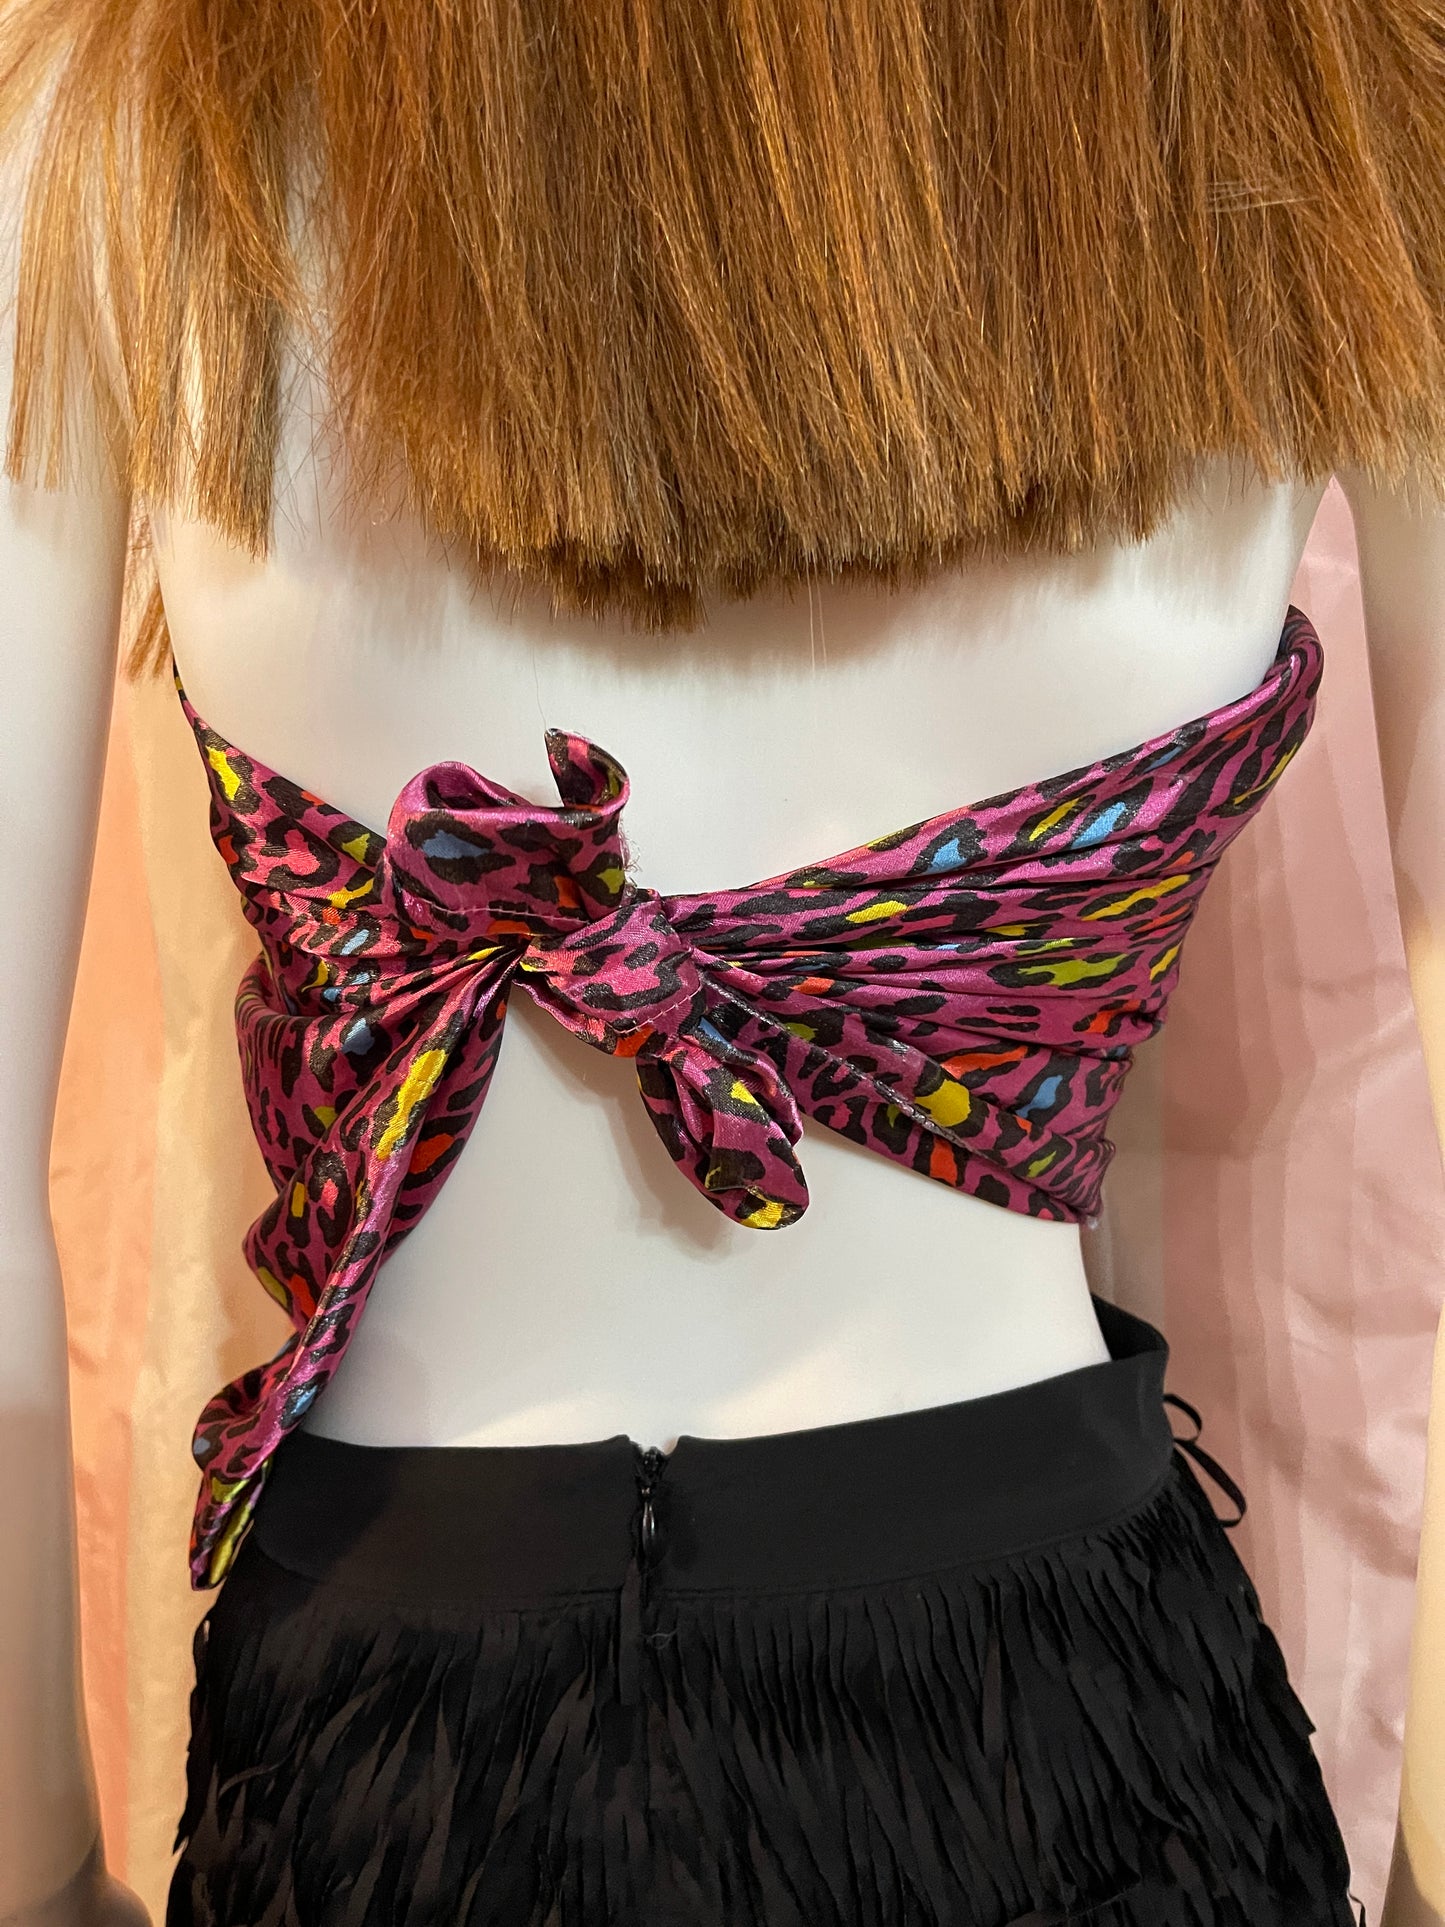 Hot Pink Cheetah Silk Scarf Top and Black Fringe Mini Skirt